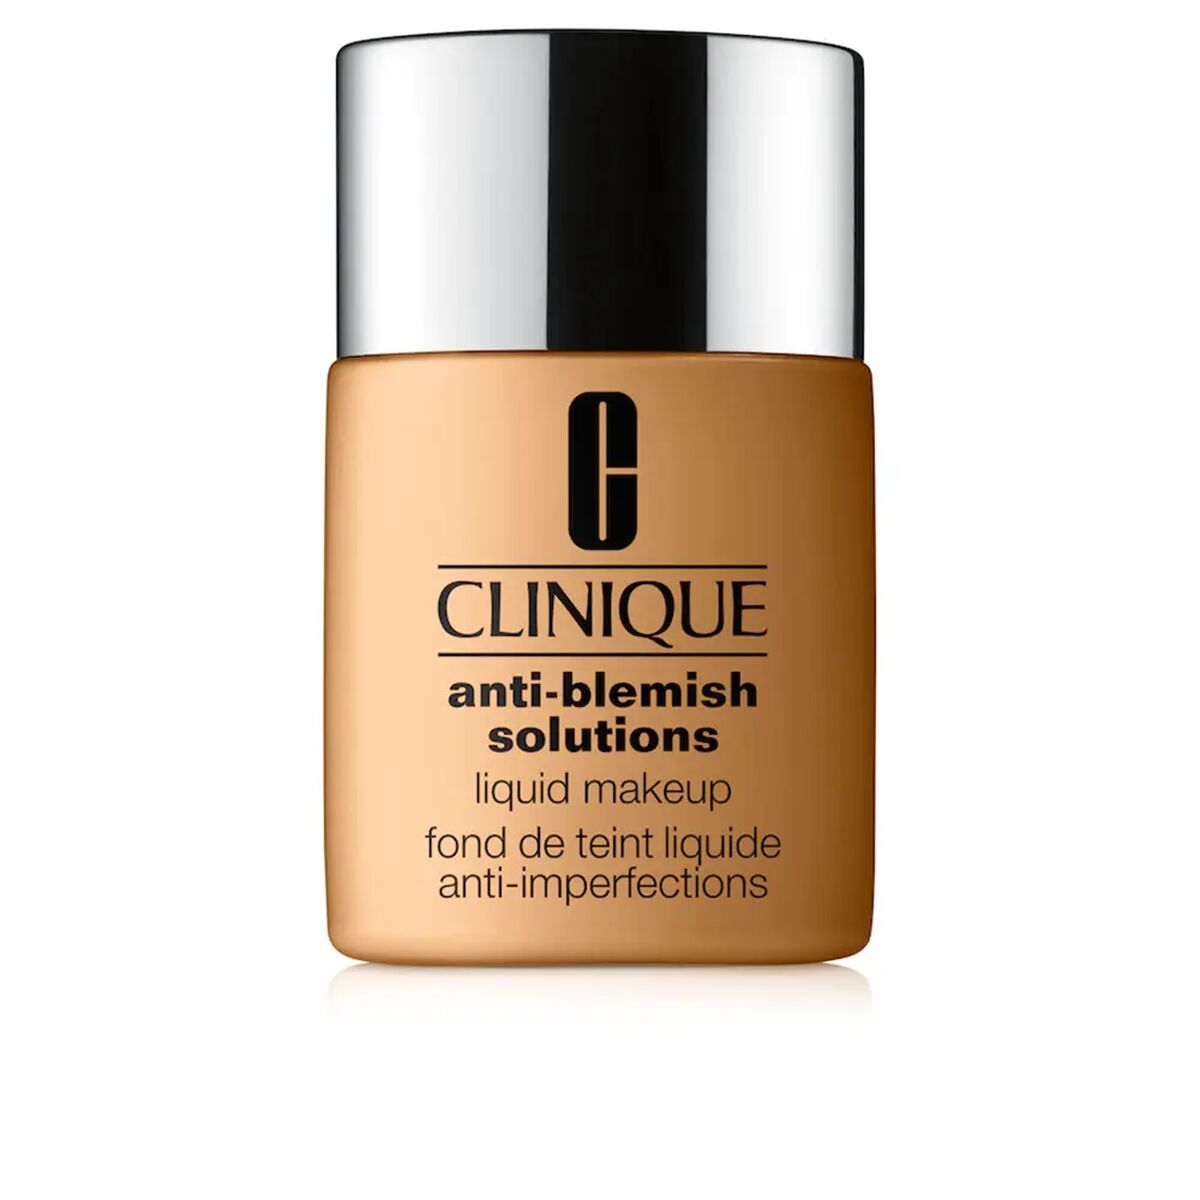 Kaufe Fluid Makeup Basis Clinique Anti-blemish Solutions honey 30 ml bei AWK Flagship um € 48.00